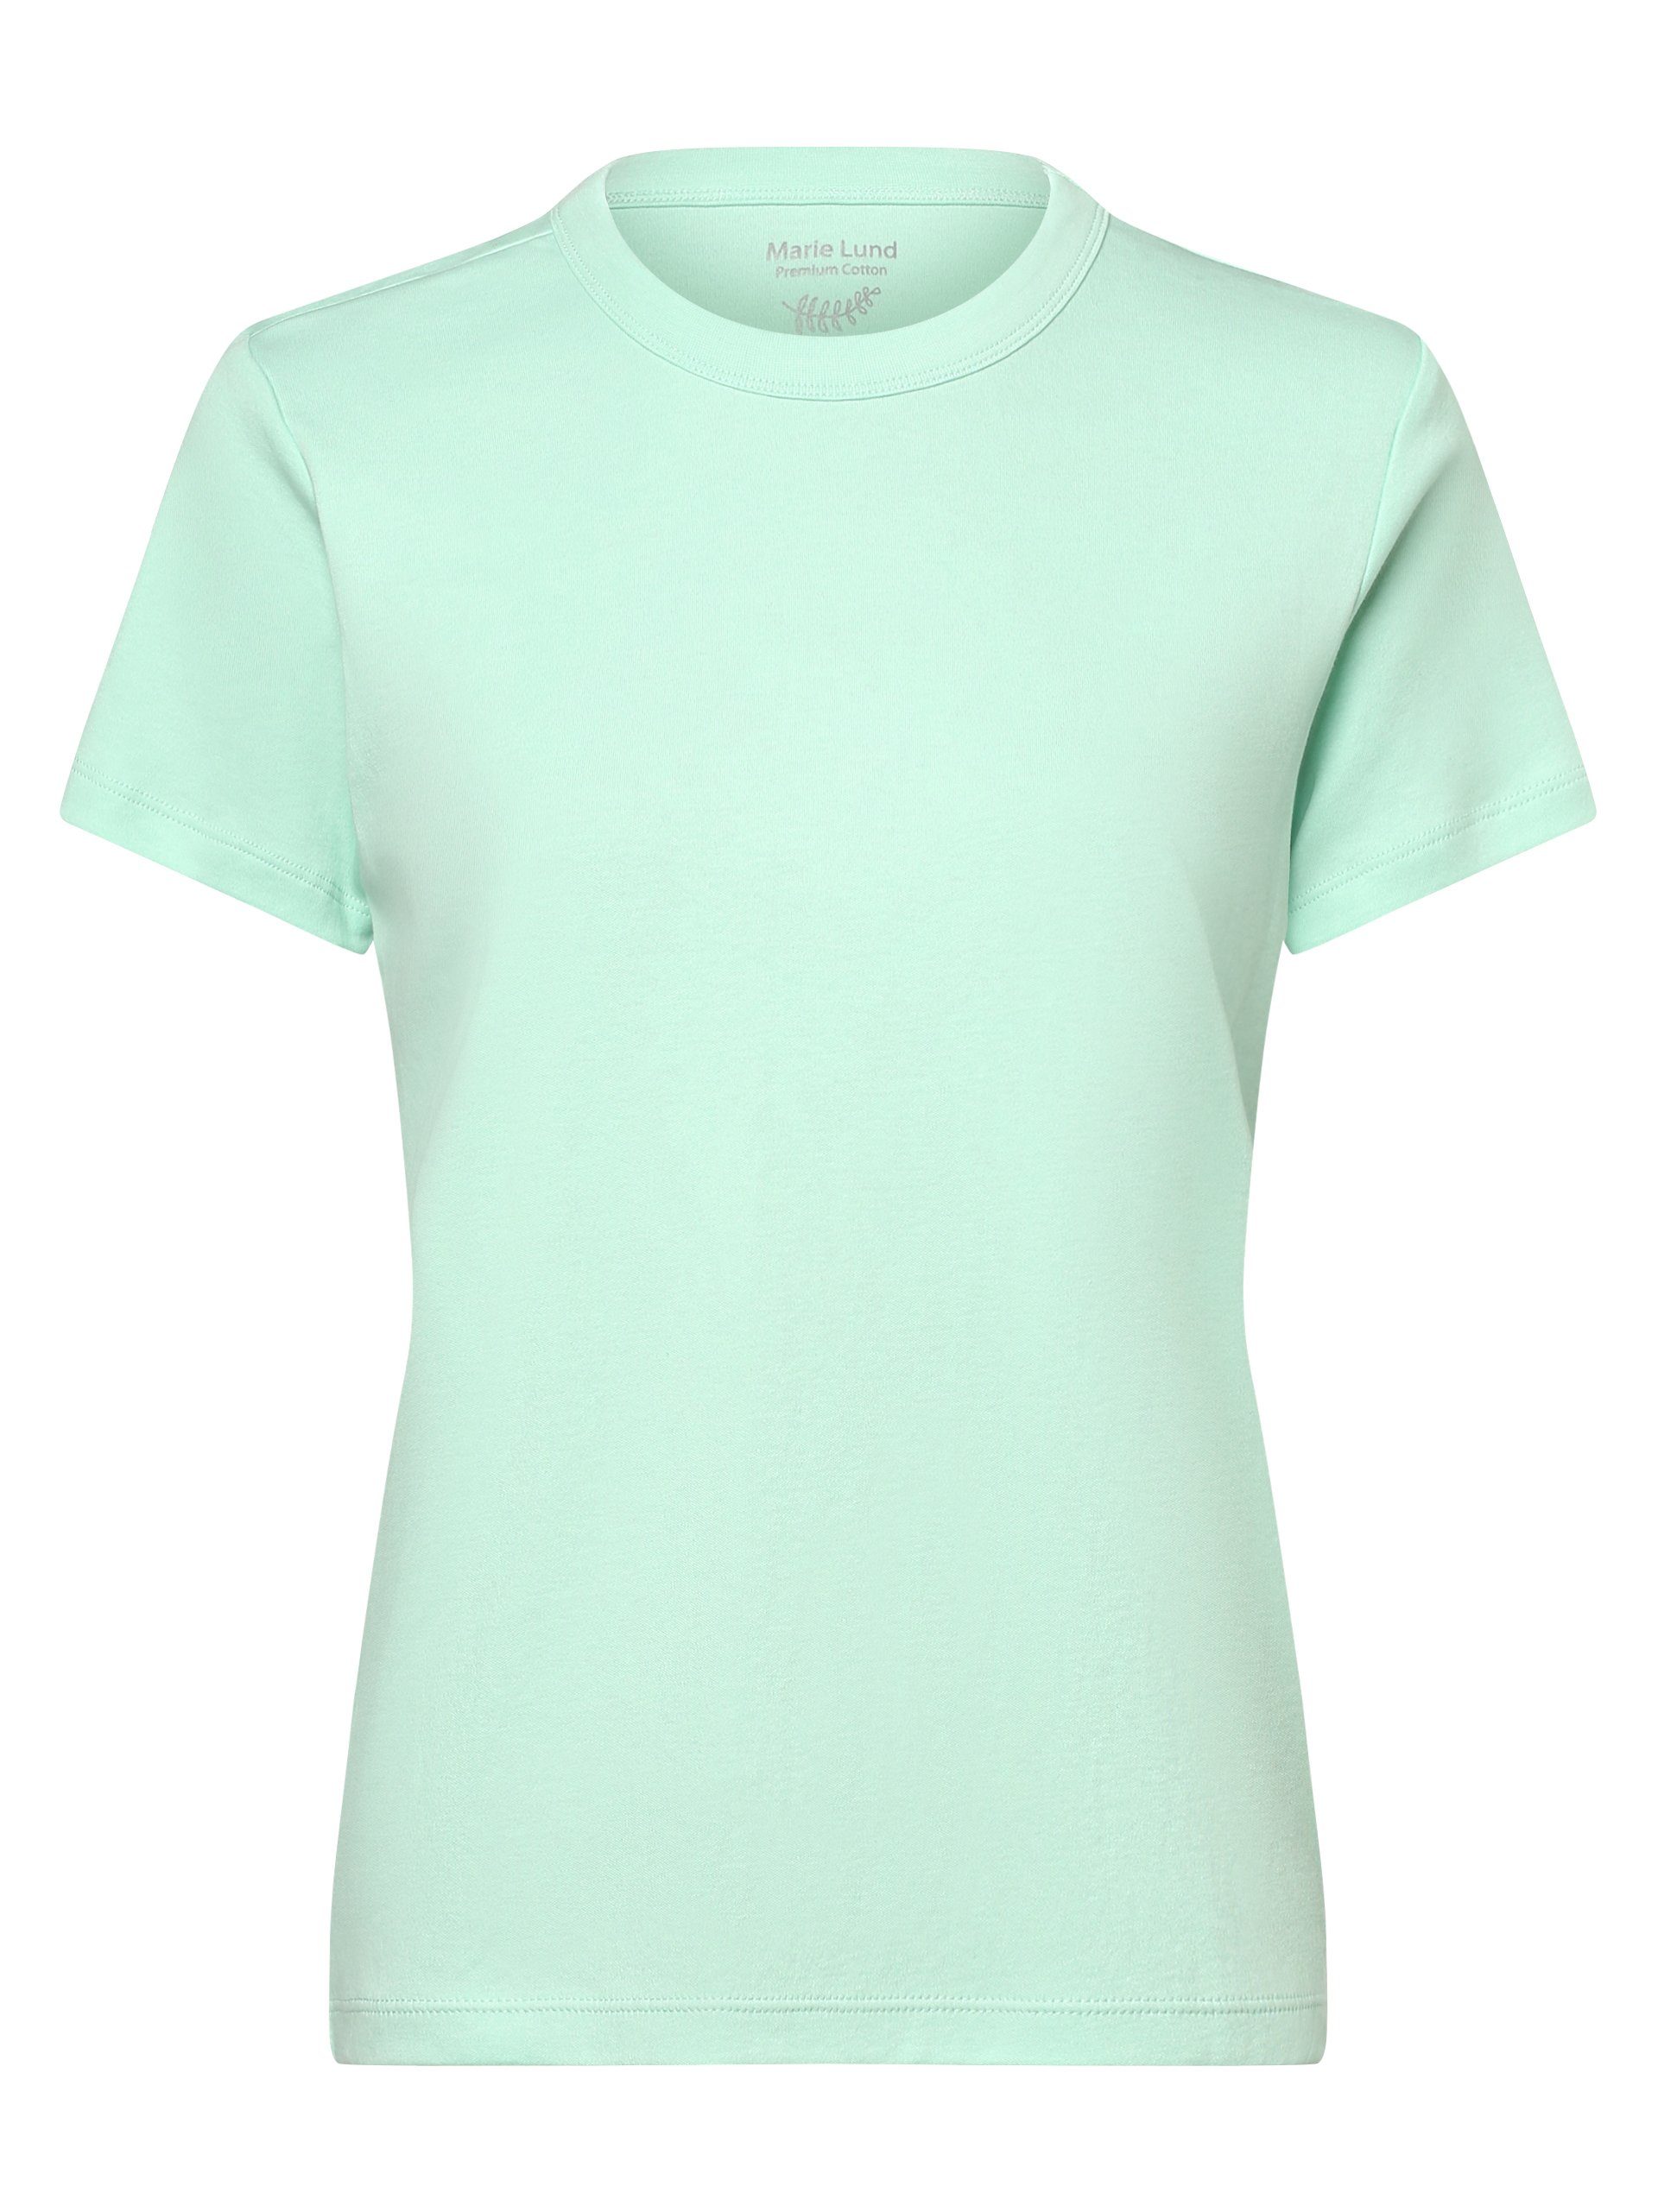 Marie Lund T-Shirt mint